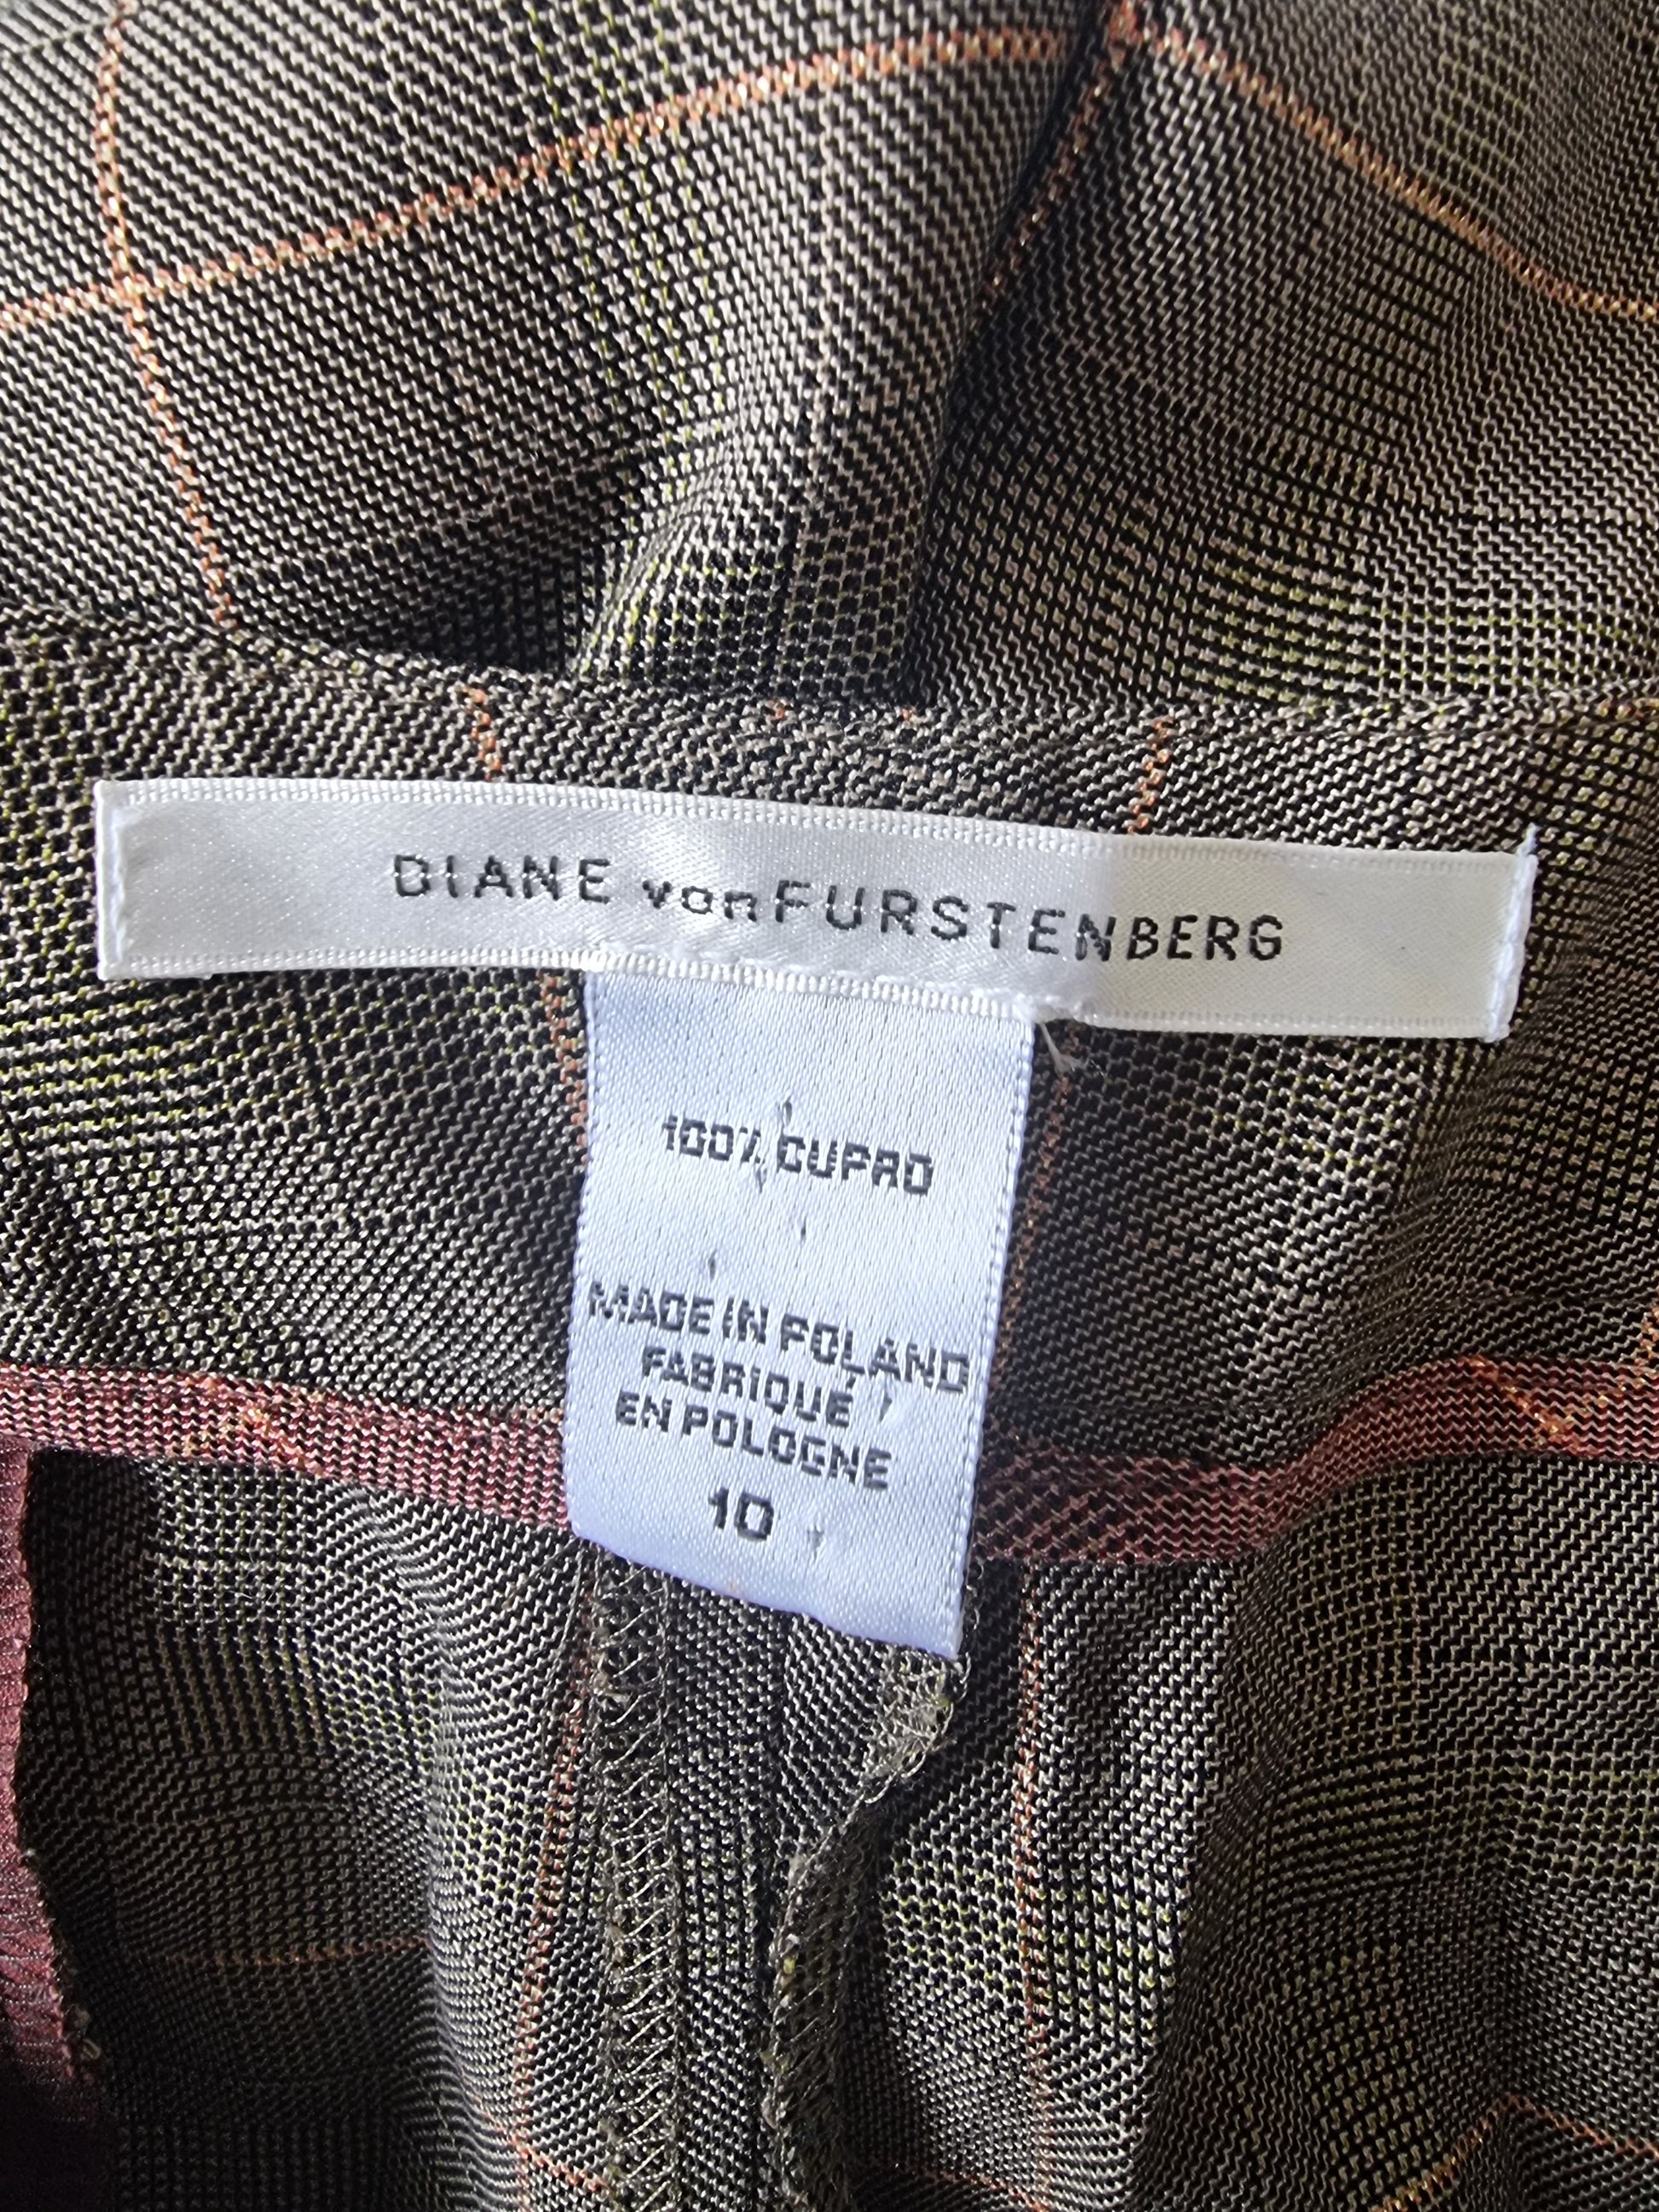 Diane von Furstenberg Womens Brown/Wine Plaid Flare Leg Trousers UK 10 US 6 IT 42 EU 38 Timeless Fashions